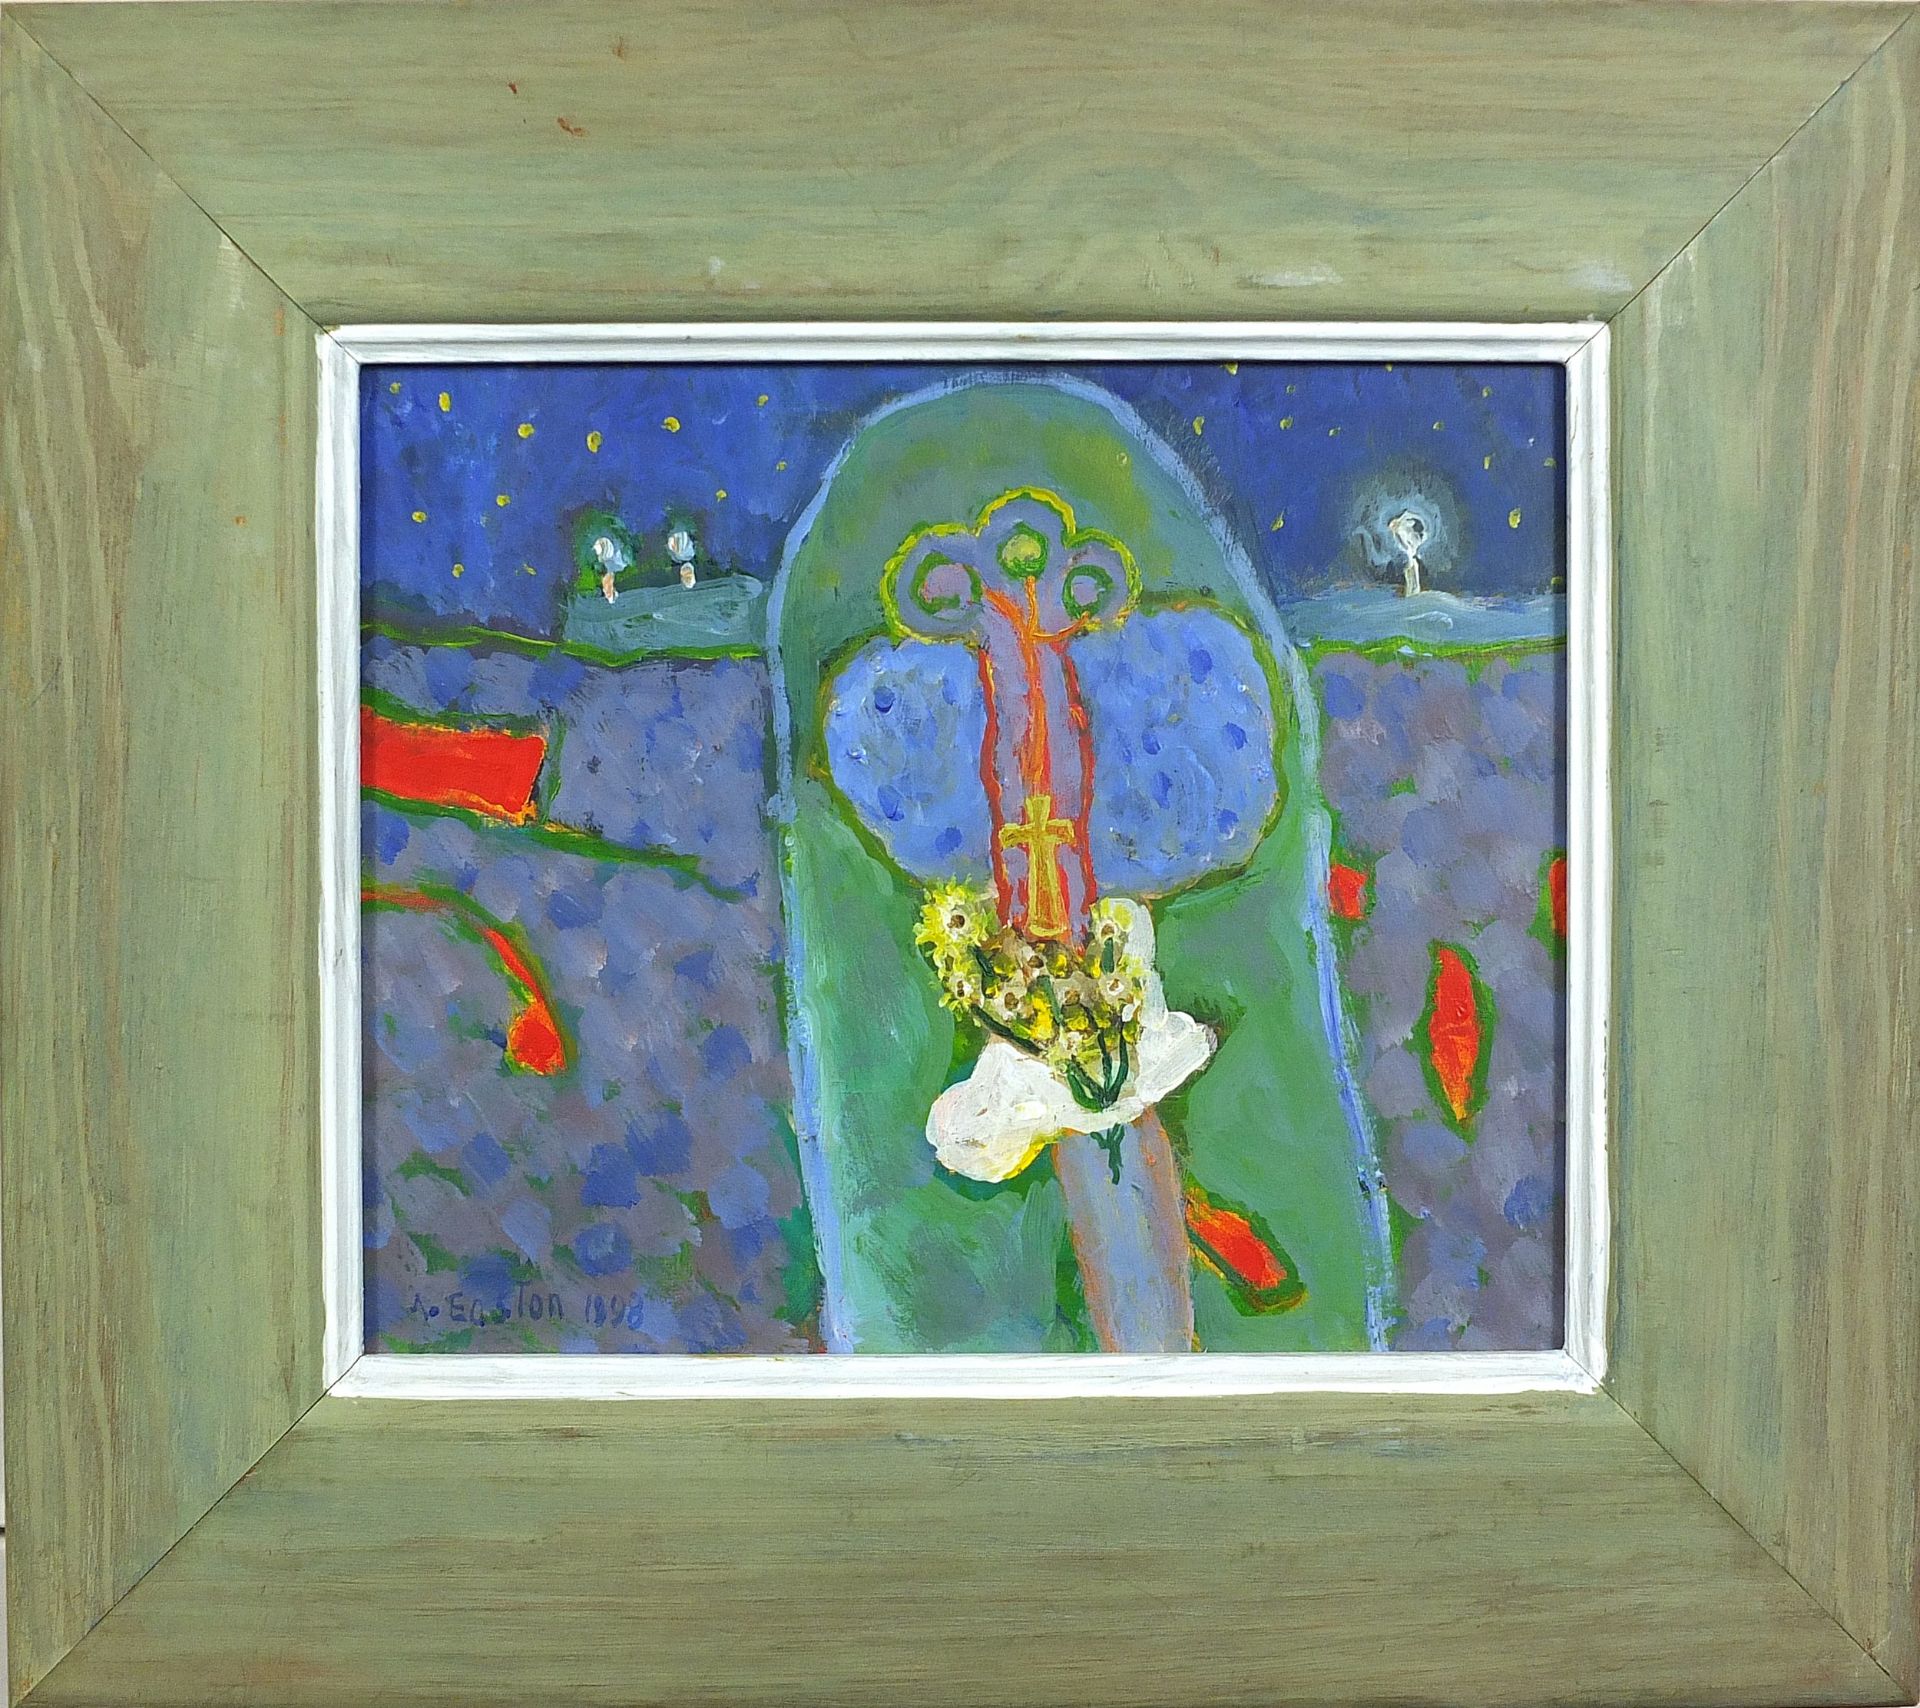 Arthur Easton 1998 - Sunset Newdigate, surreal oil on board, details verso, framed, 21.5cm x 18cm - Bild 2 aus 5